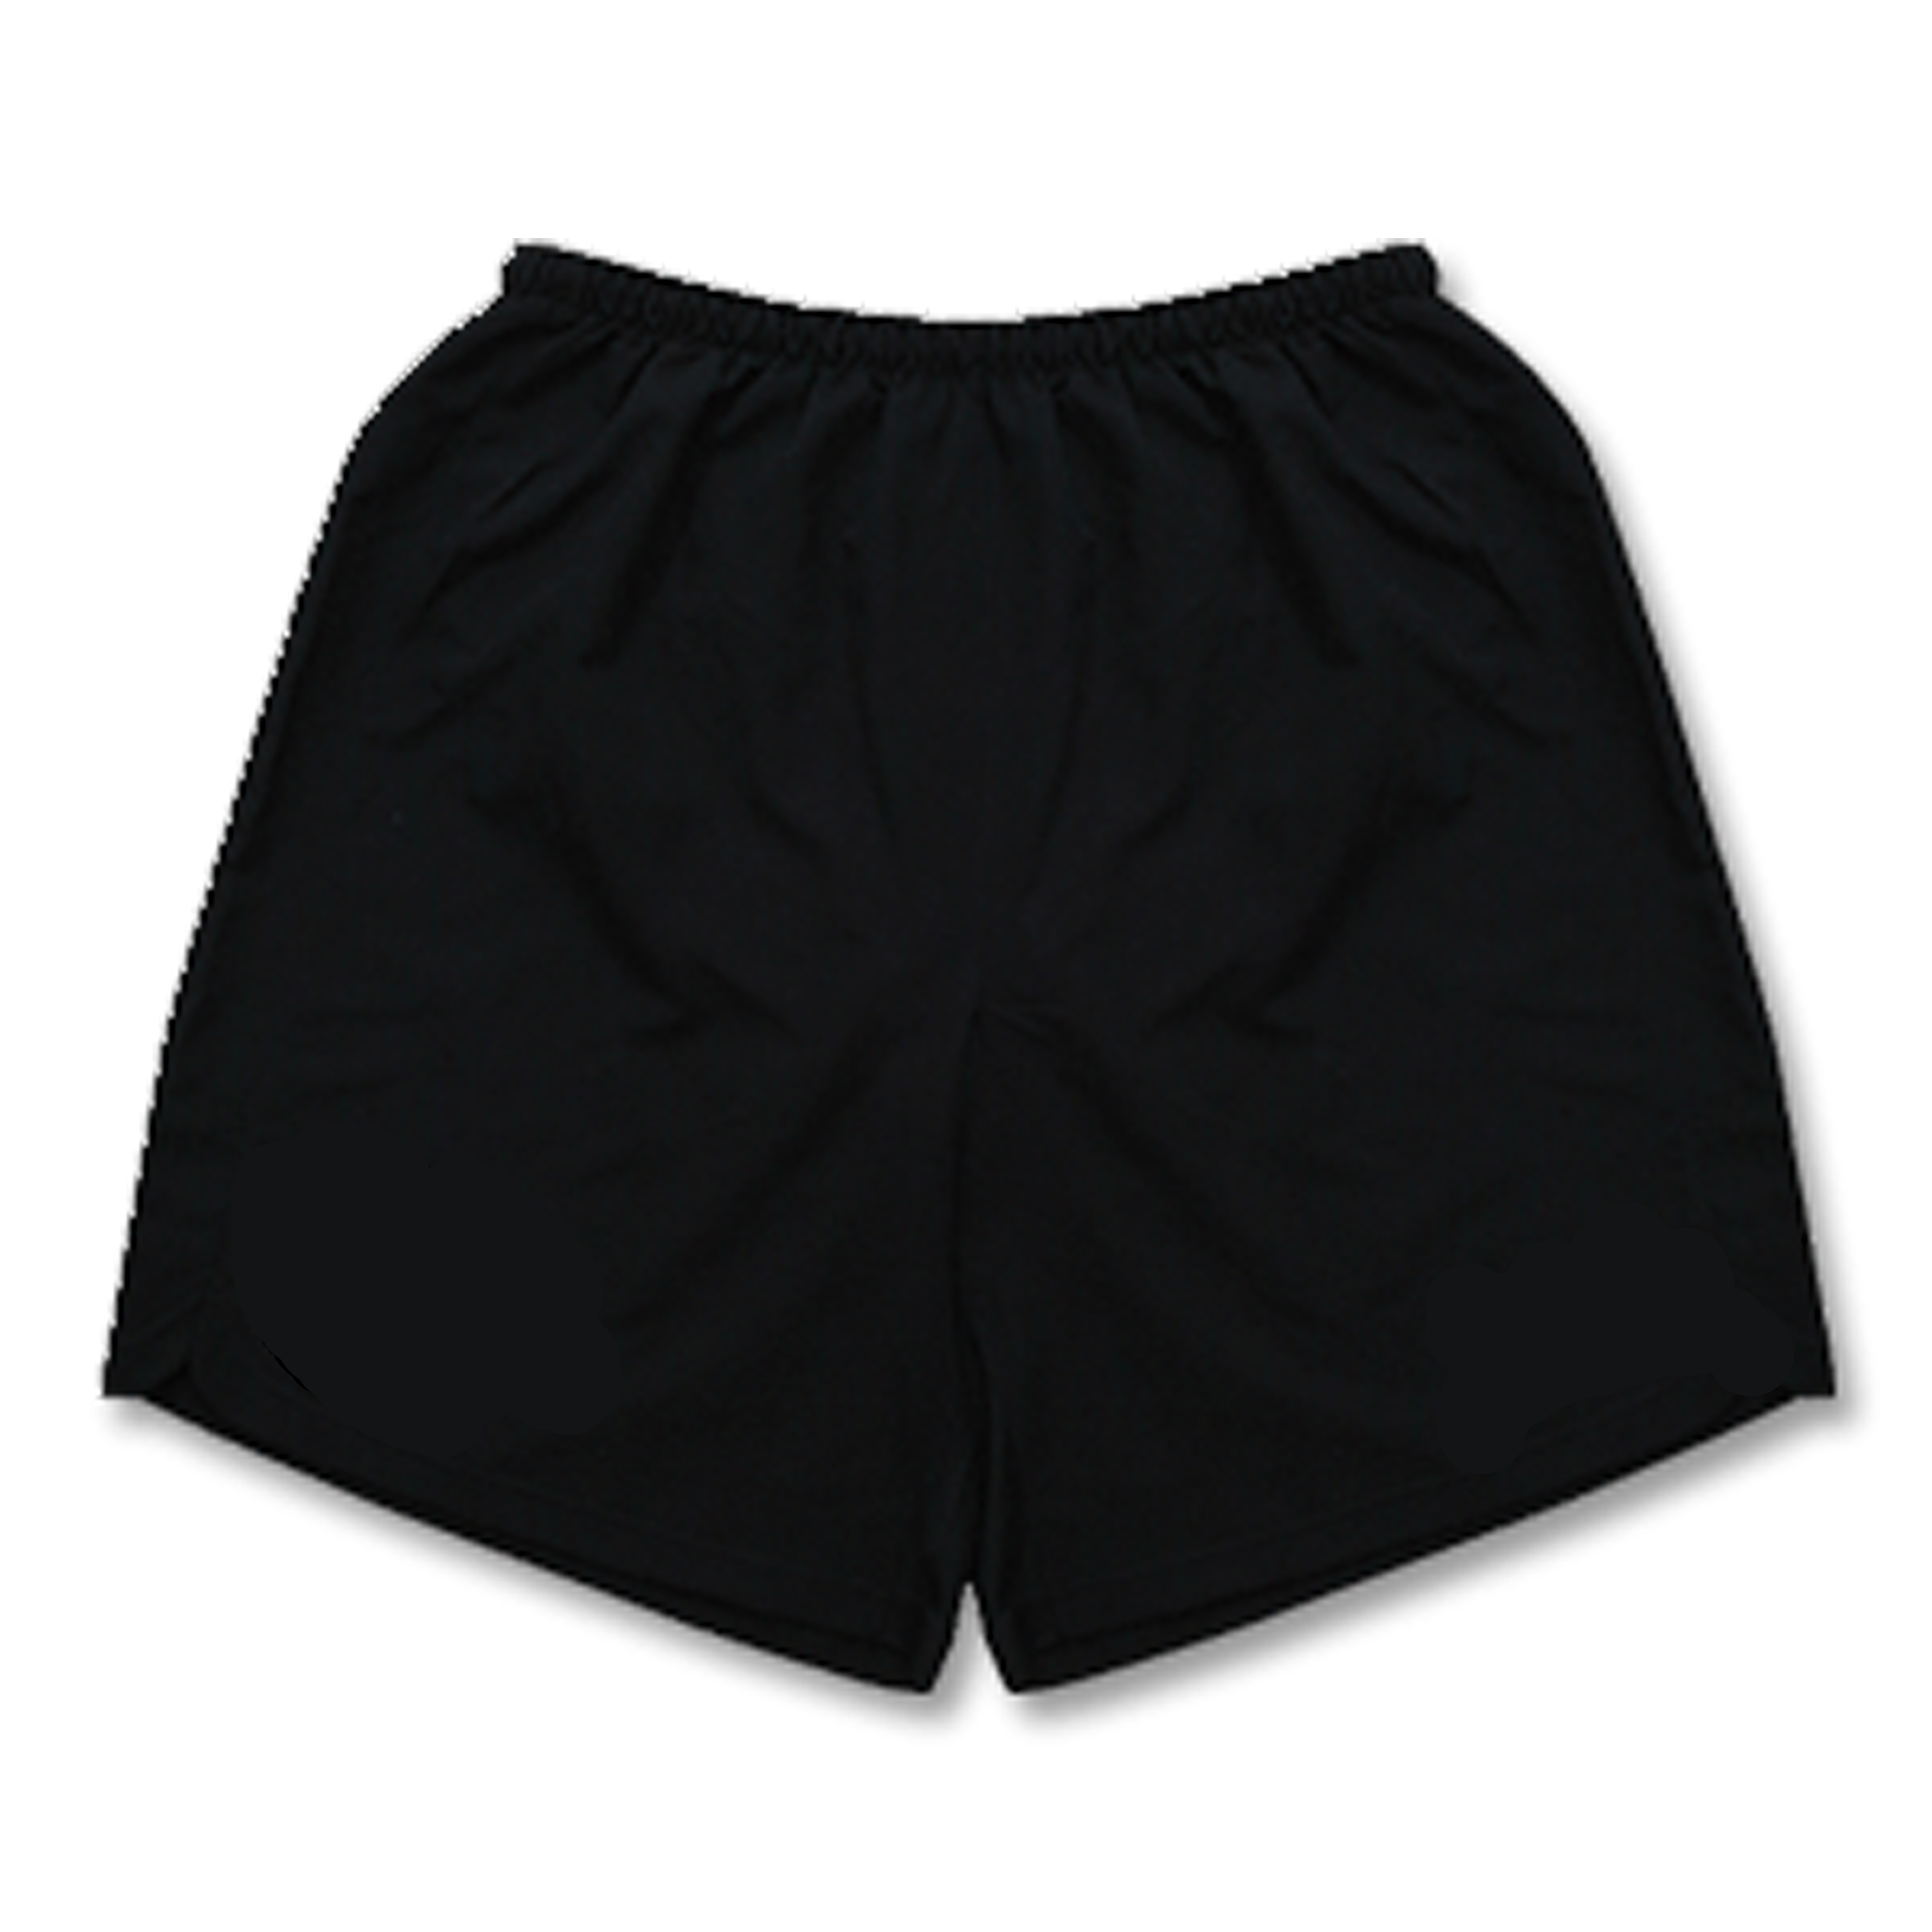 Black Shorts Template